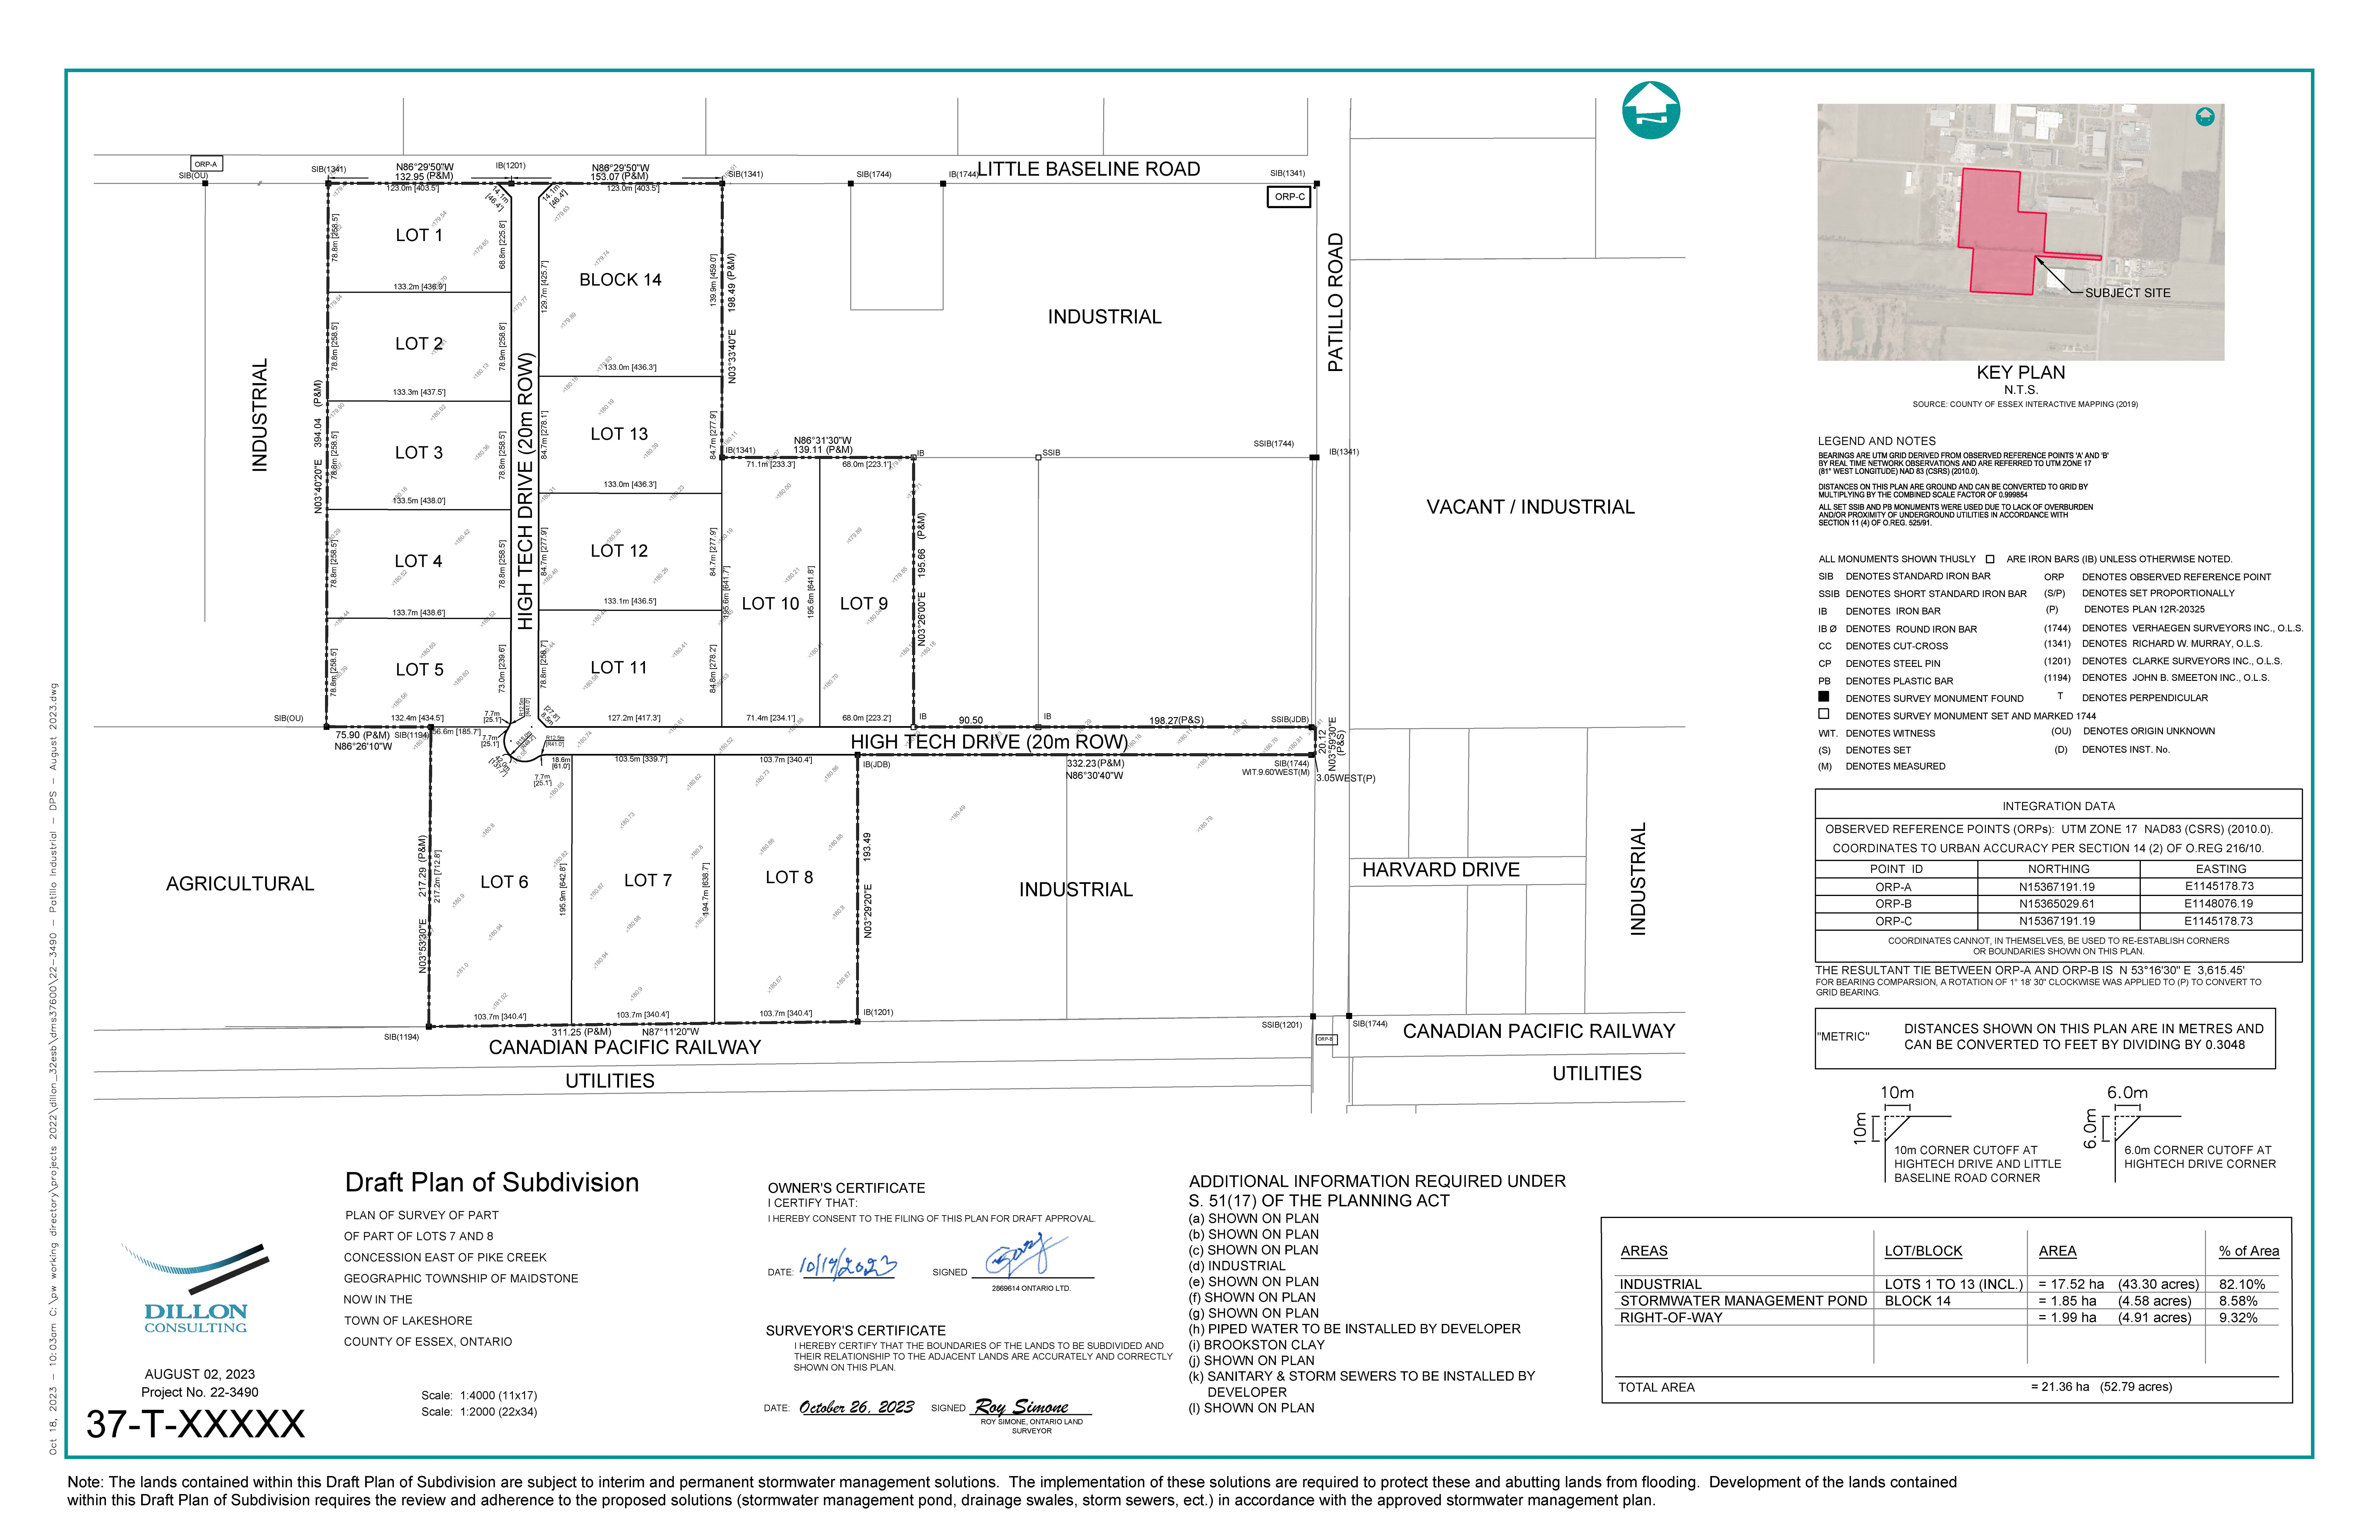 Image of draft plan of subdivision.